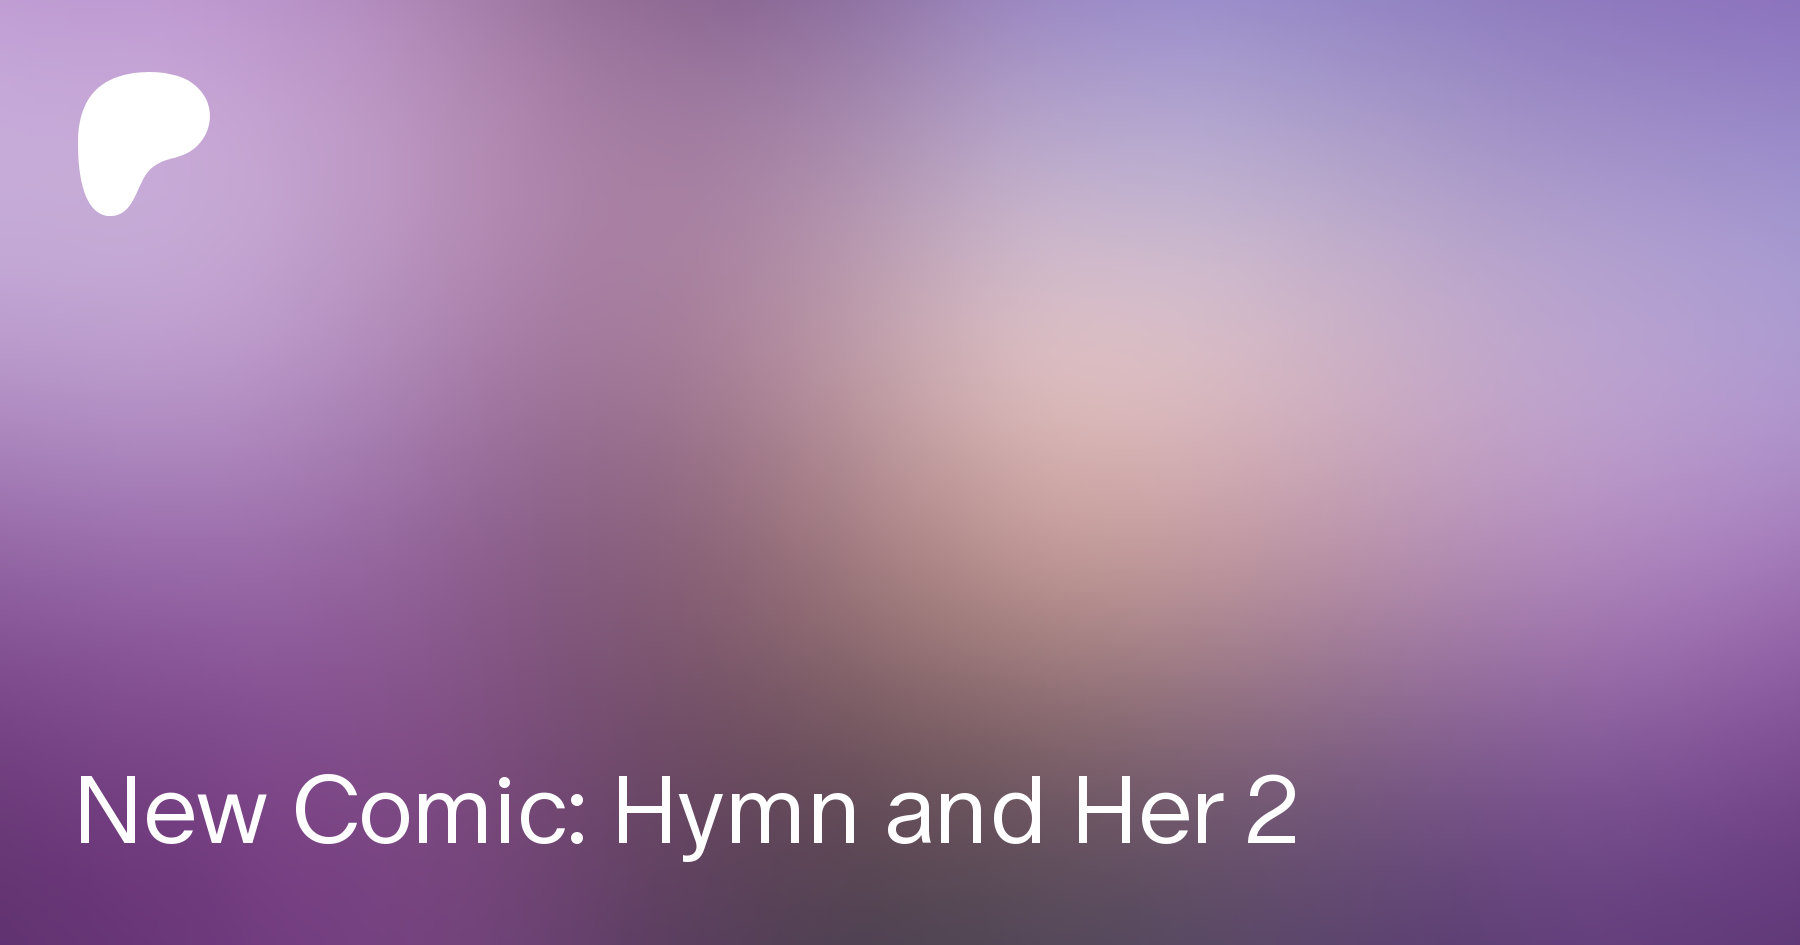 Hymn and her comic